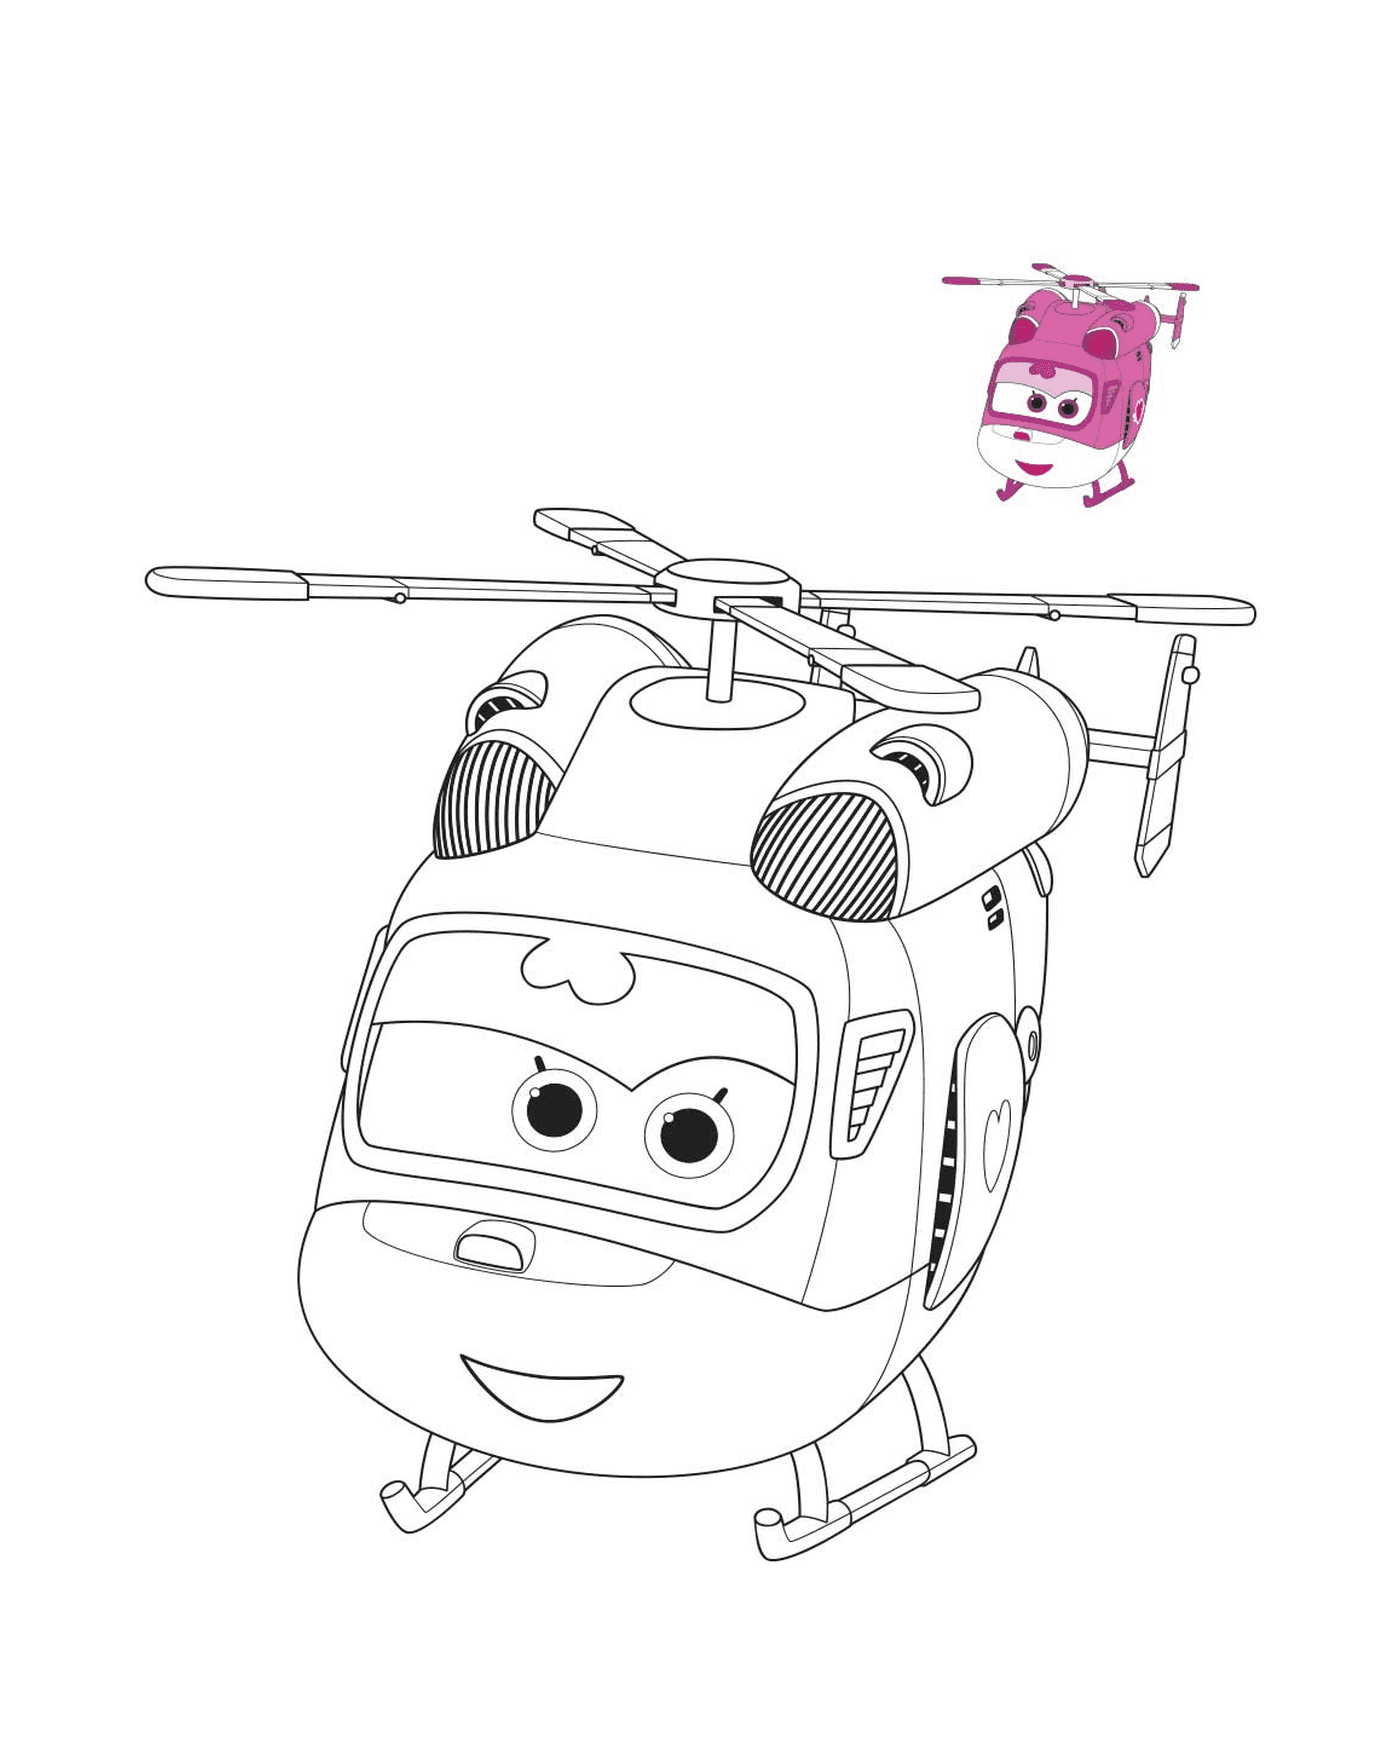  Dizzy, un elicottero 